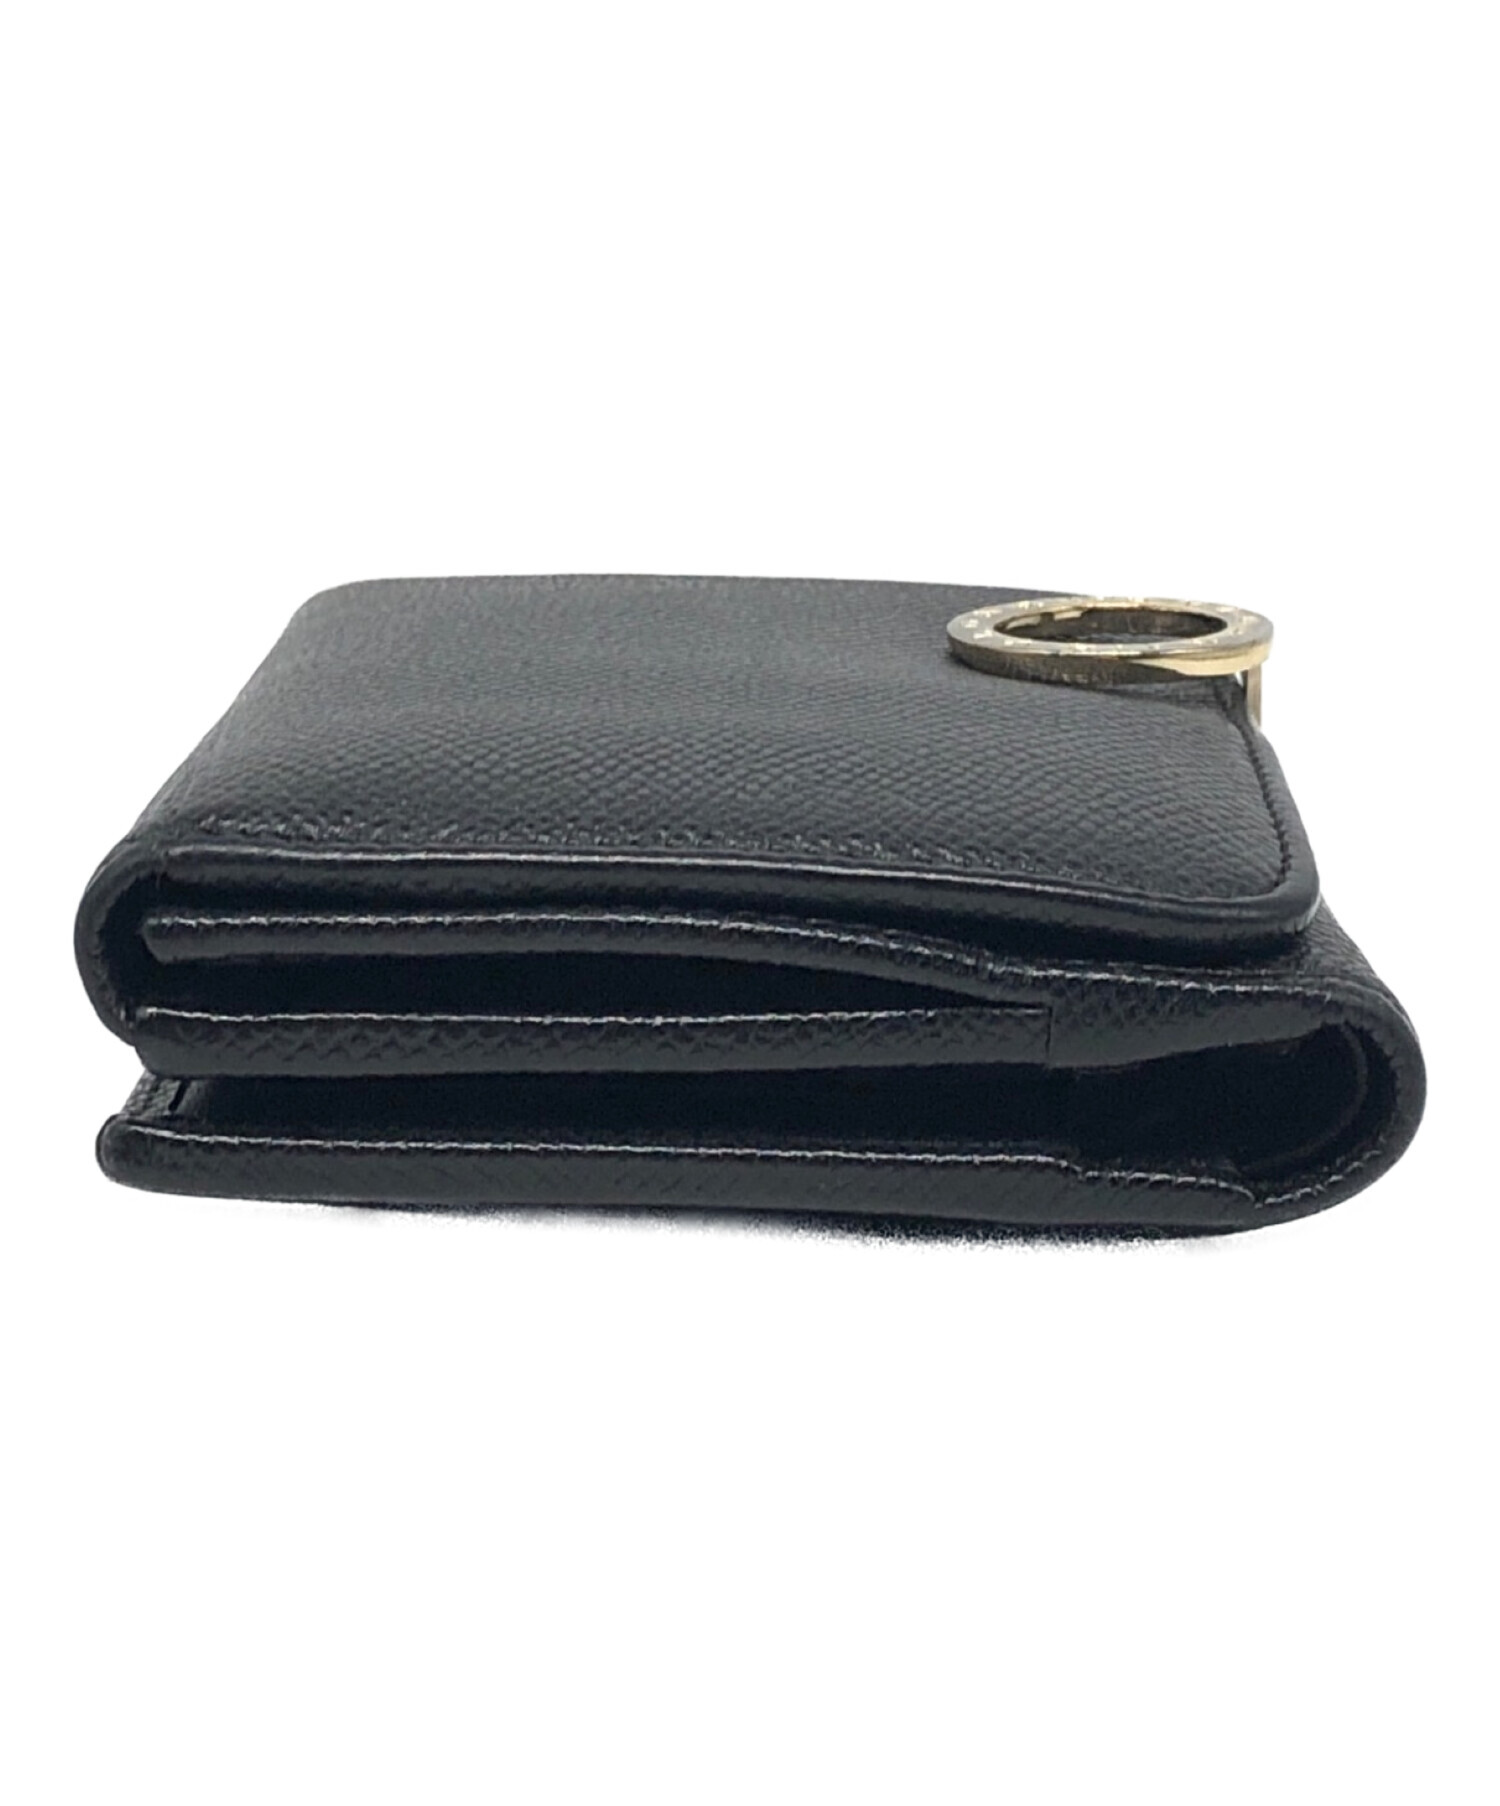 BVLGARI (ブルガリ) 財布 ブラック